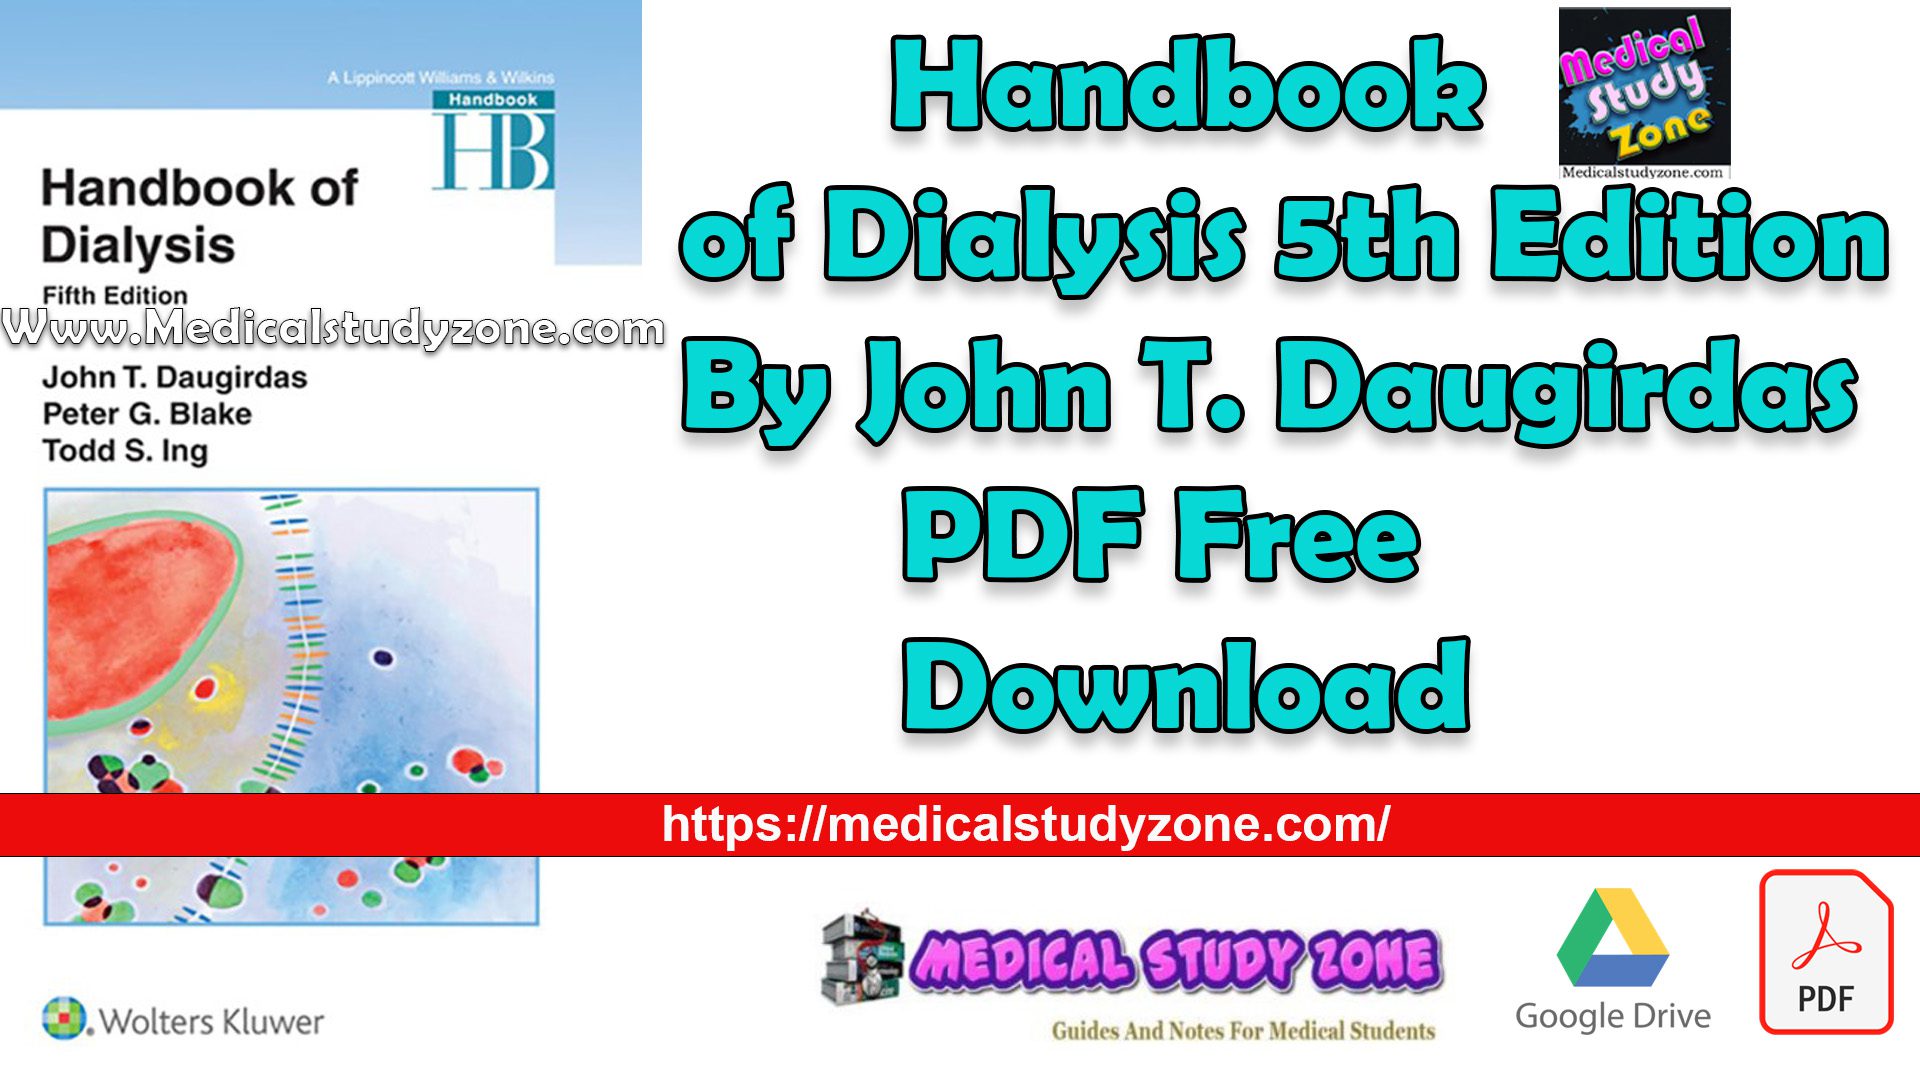 Handbook of Dialysis 5th Edition By John T. Daugirdas PDF Free Download